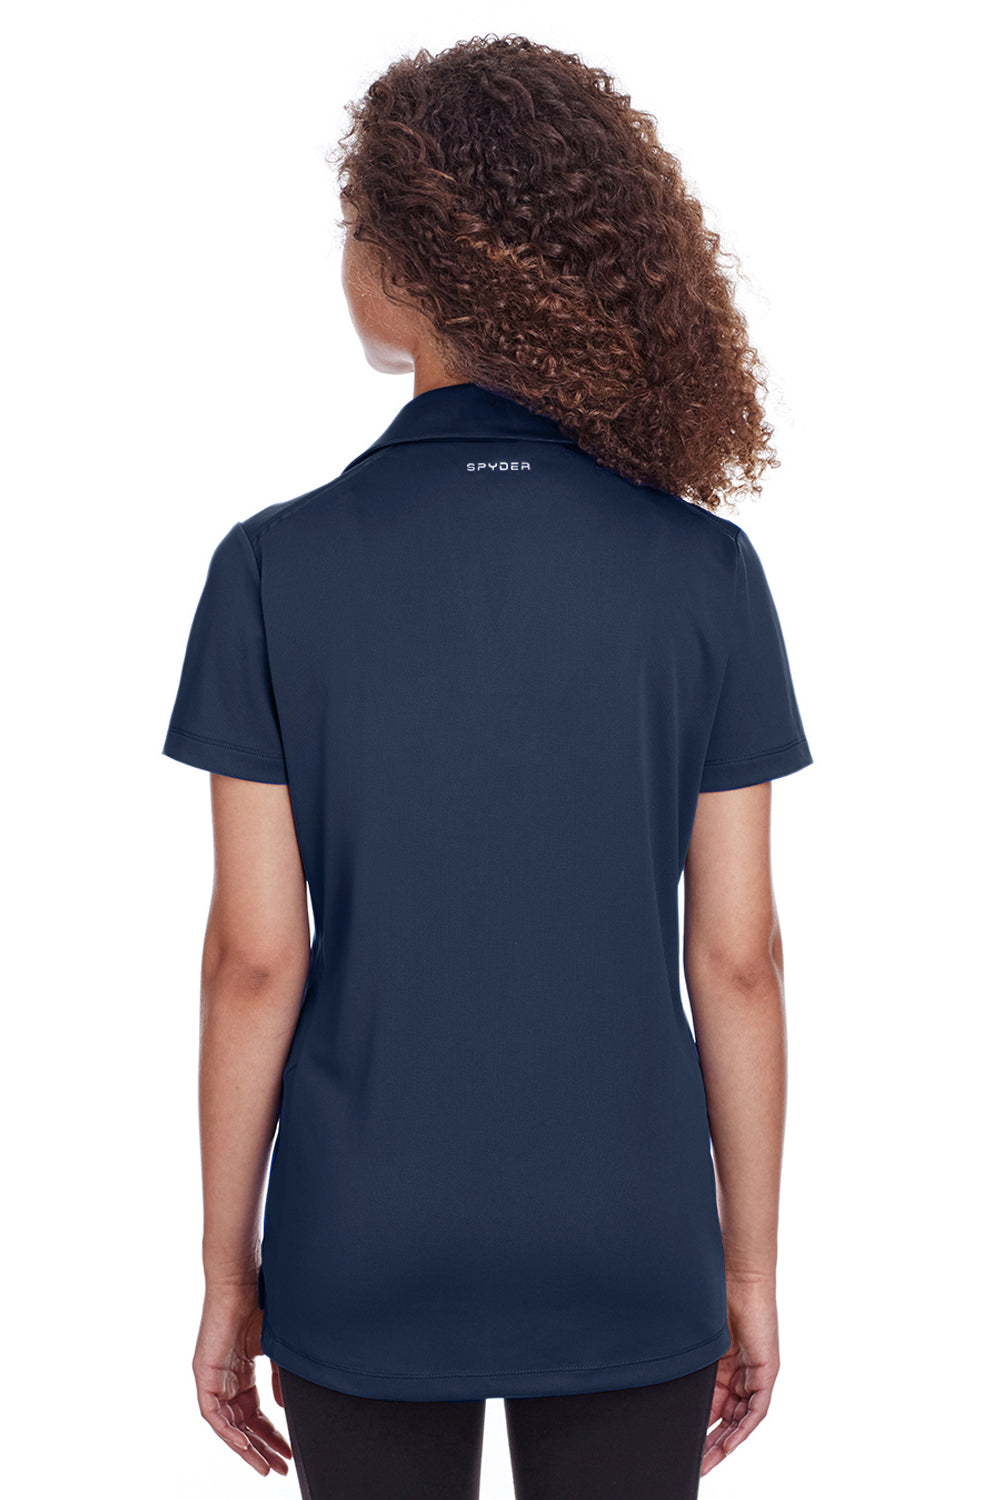 Spyder S16519 Womens Freestyle Short Sleeve Polo Shirt Navy Blue Back